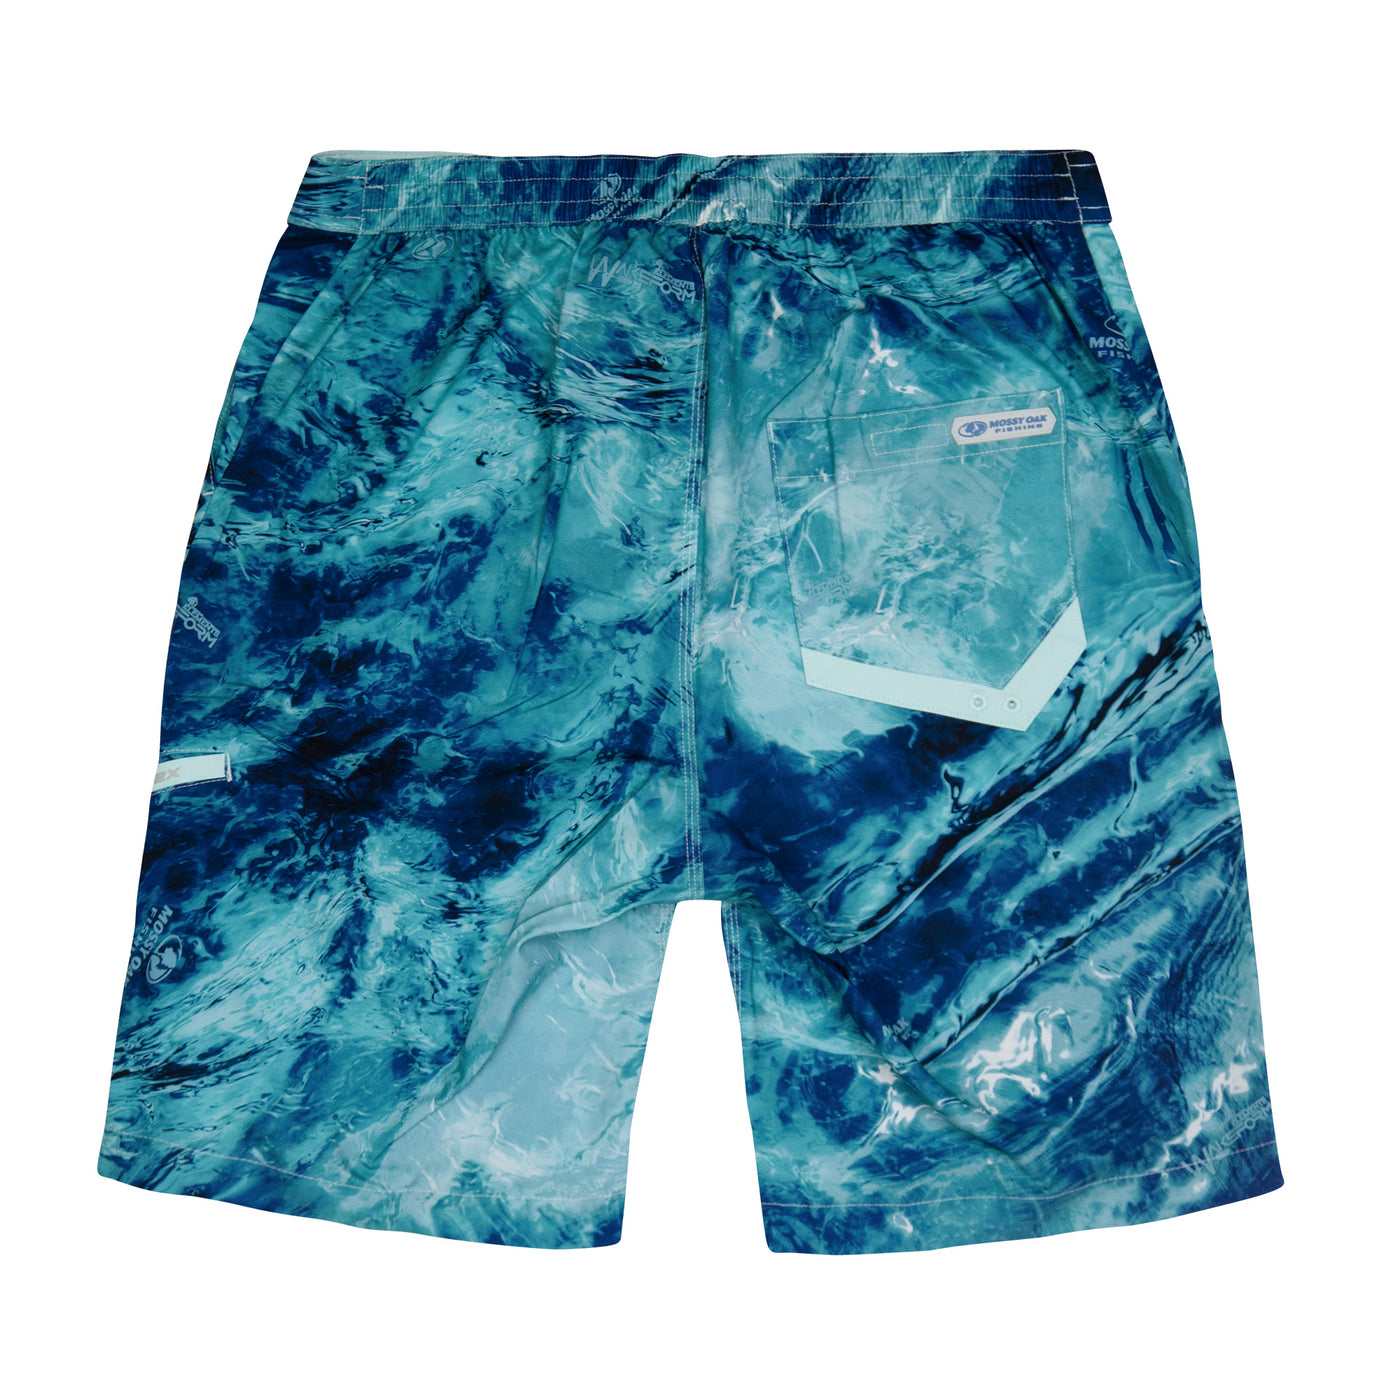 Mossy Oak Men's Standard Fishing Shorts Quick Dry Flex, Charcoal